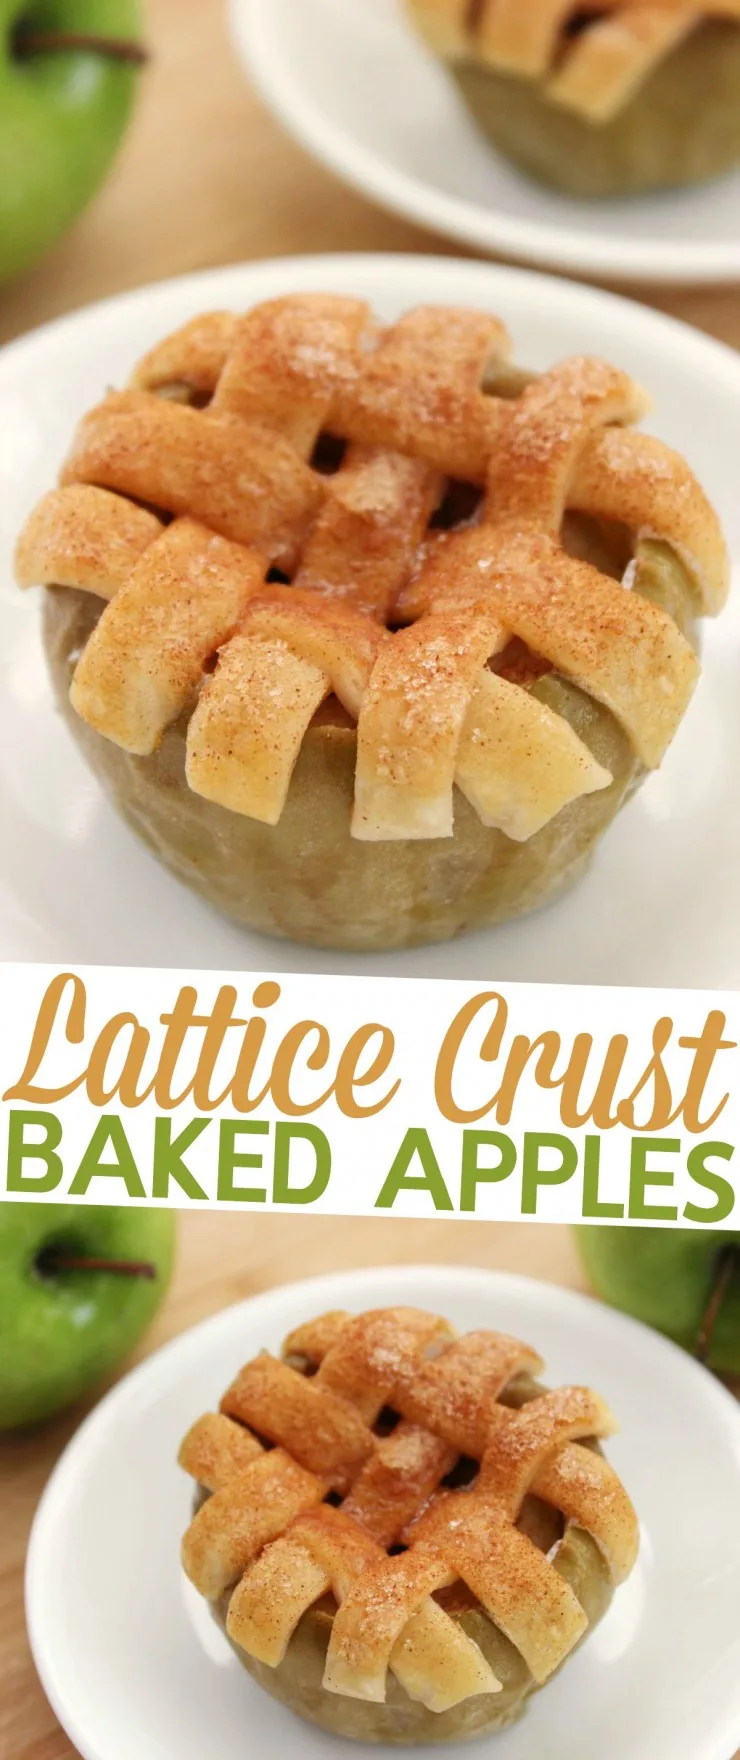 Lattice Crust Baked Apples